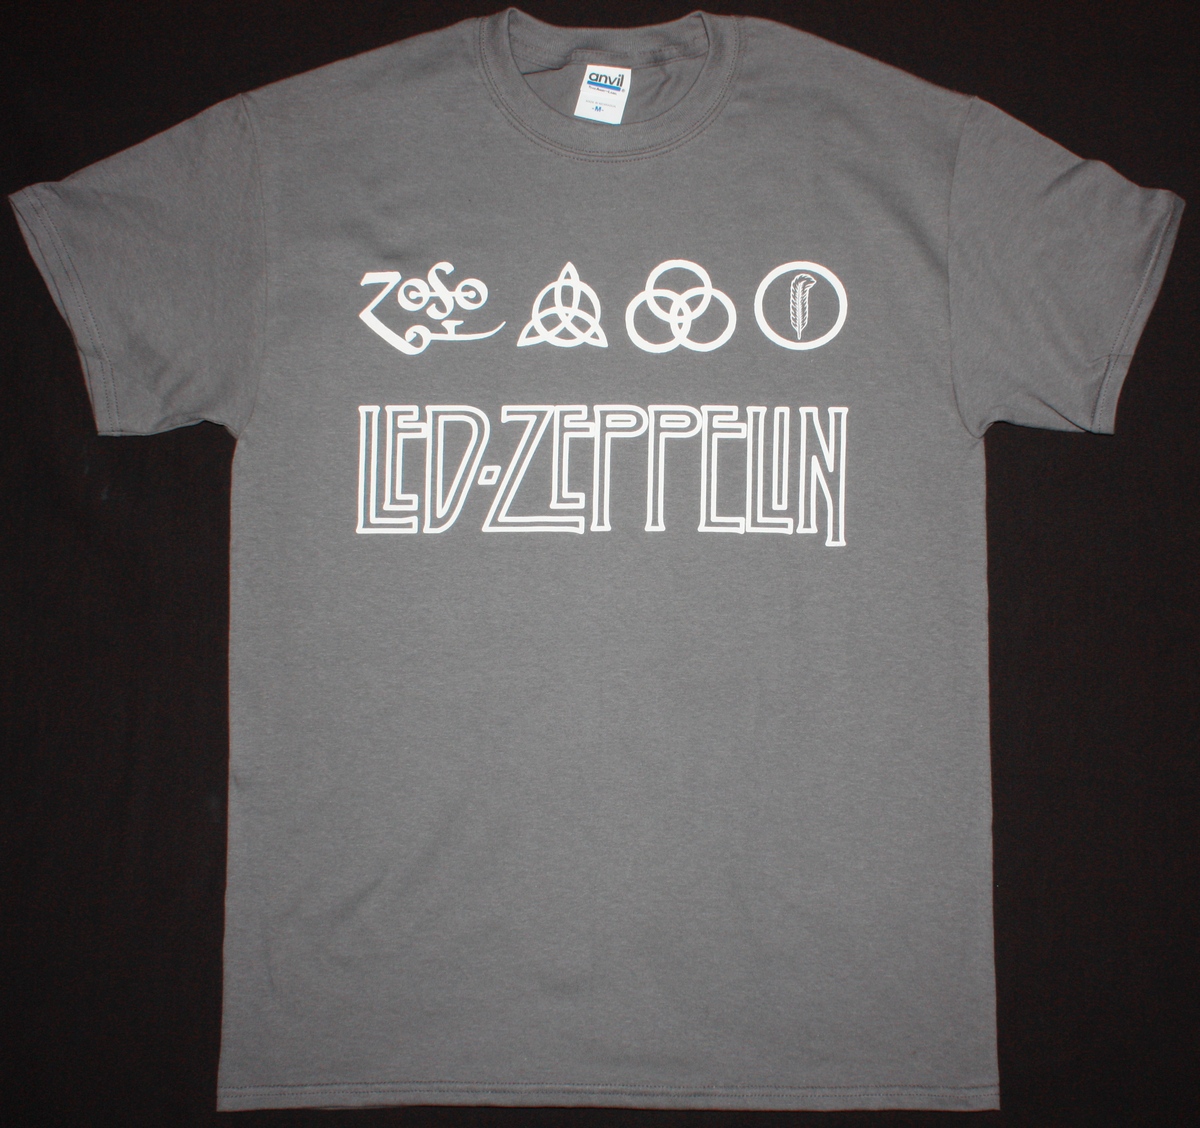 LED ZEPPELIN LOGO NEW GREY CHARCOAL T-SHIRT - Best Rock T-shirts